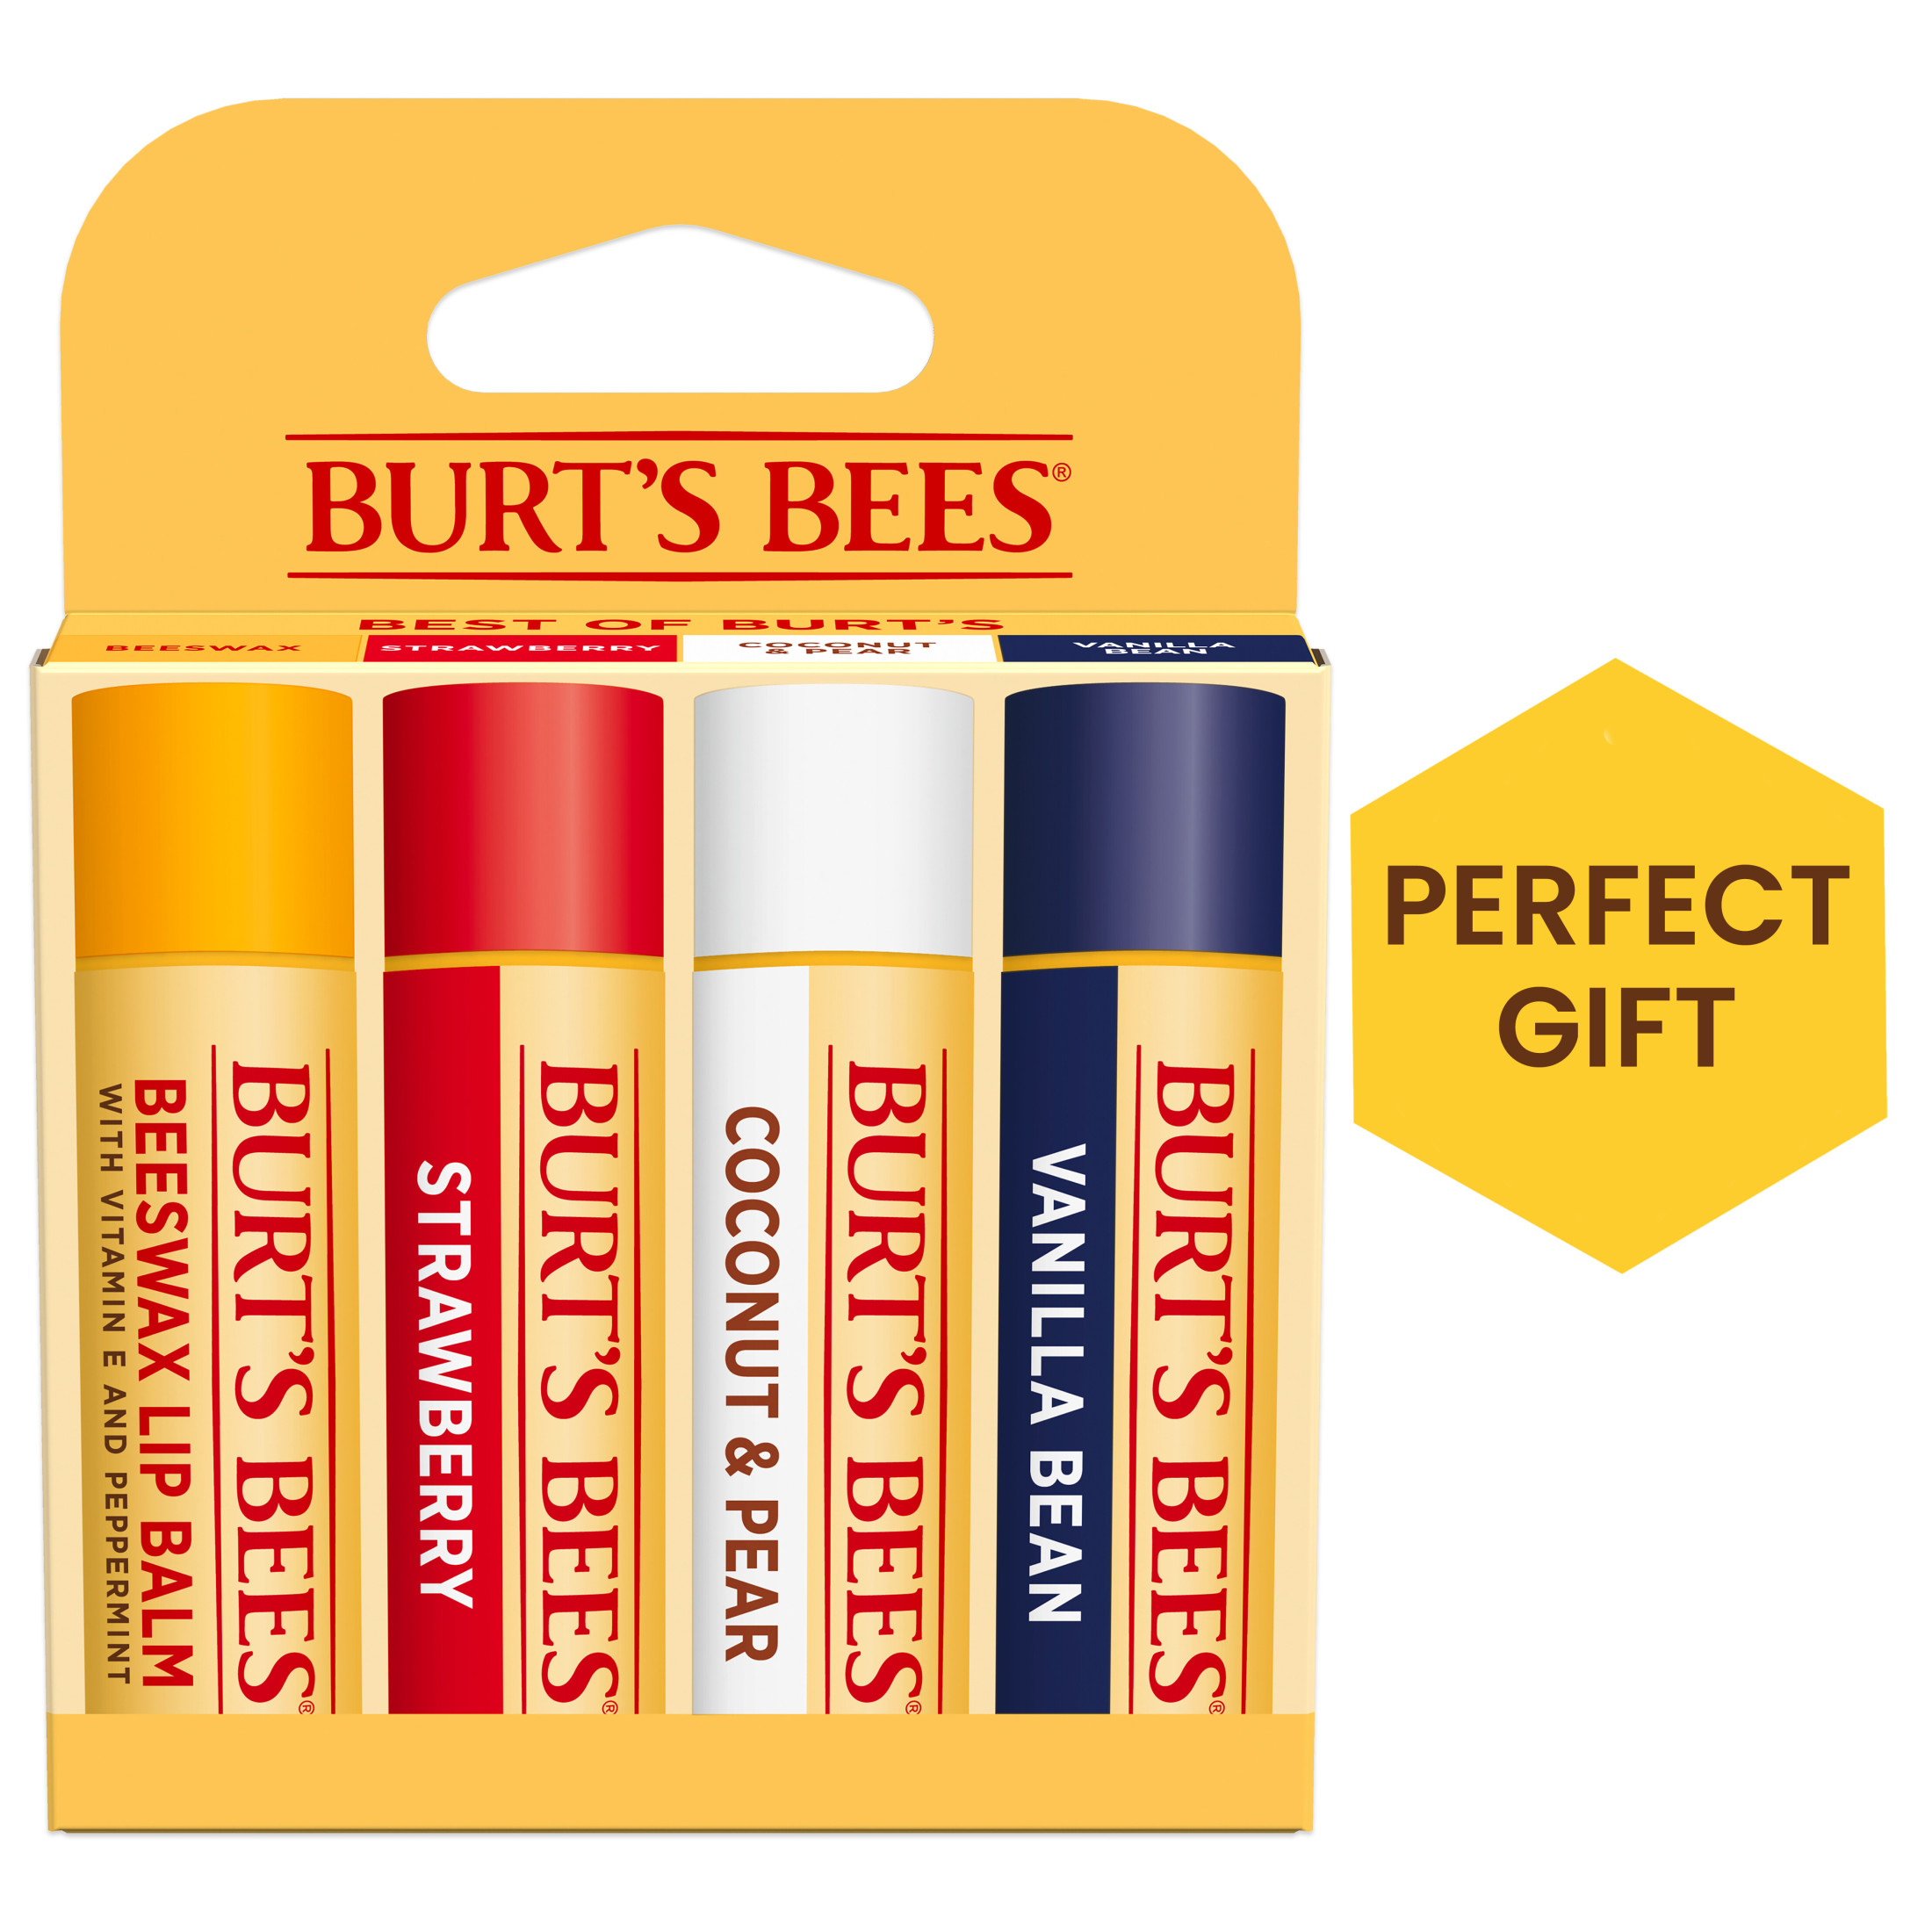 Burt's Bees 100% Natural Origin Moisturizing Lip Balm with Beeswax, Variety Pack, 4 Tubes - image 1 of 11